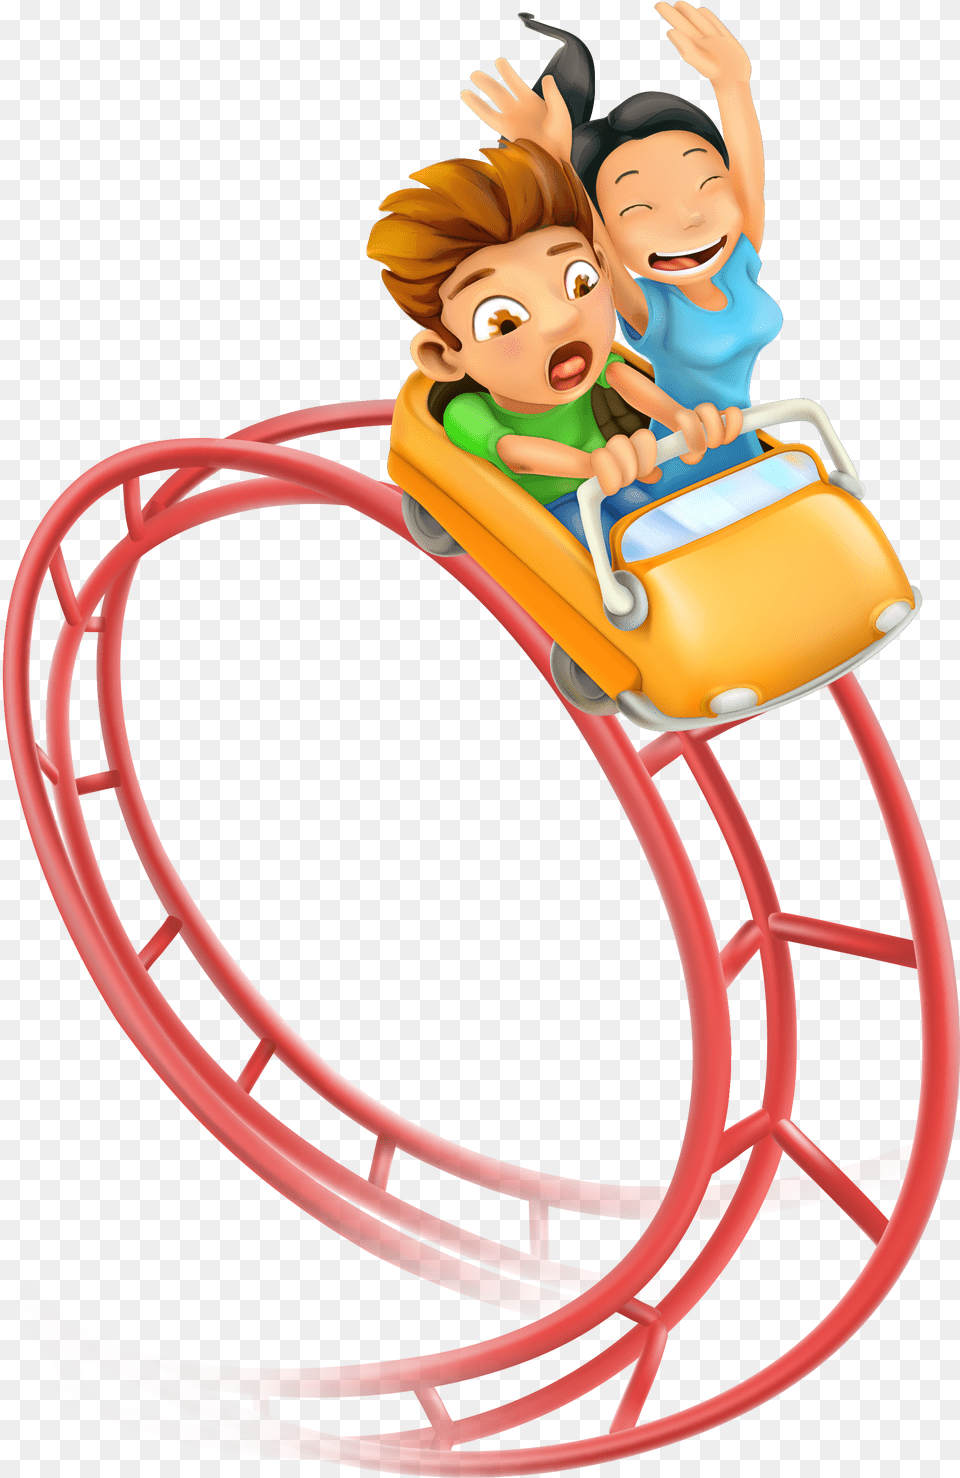 Roller Coaster Amusement Park Clip Art Clip Art Roller Coaster, Amusement Park, Roller Coaster, Fun, Baby Free Png